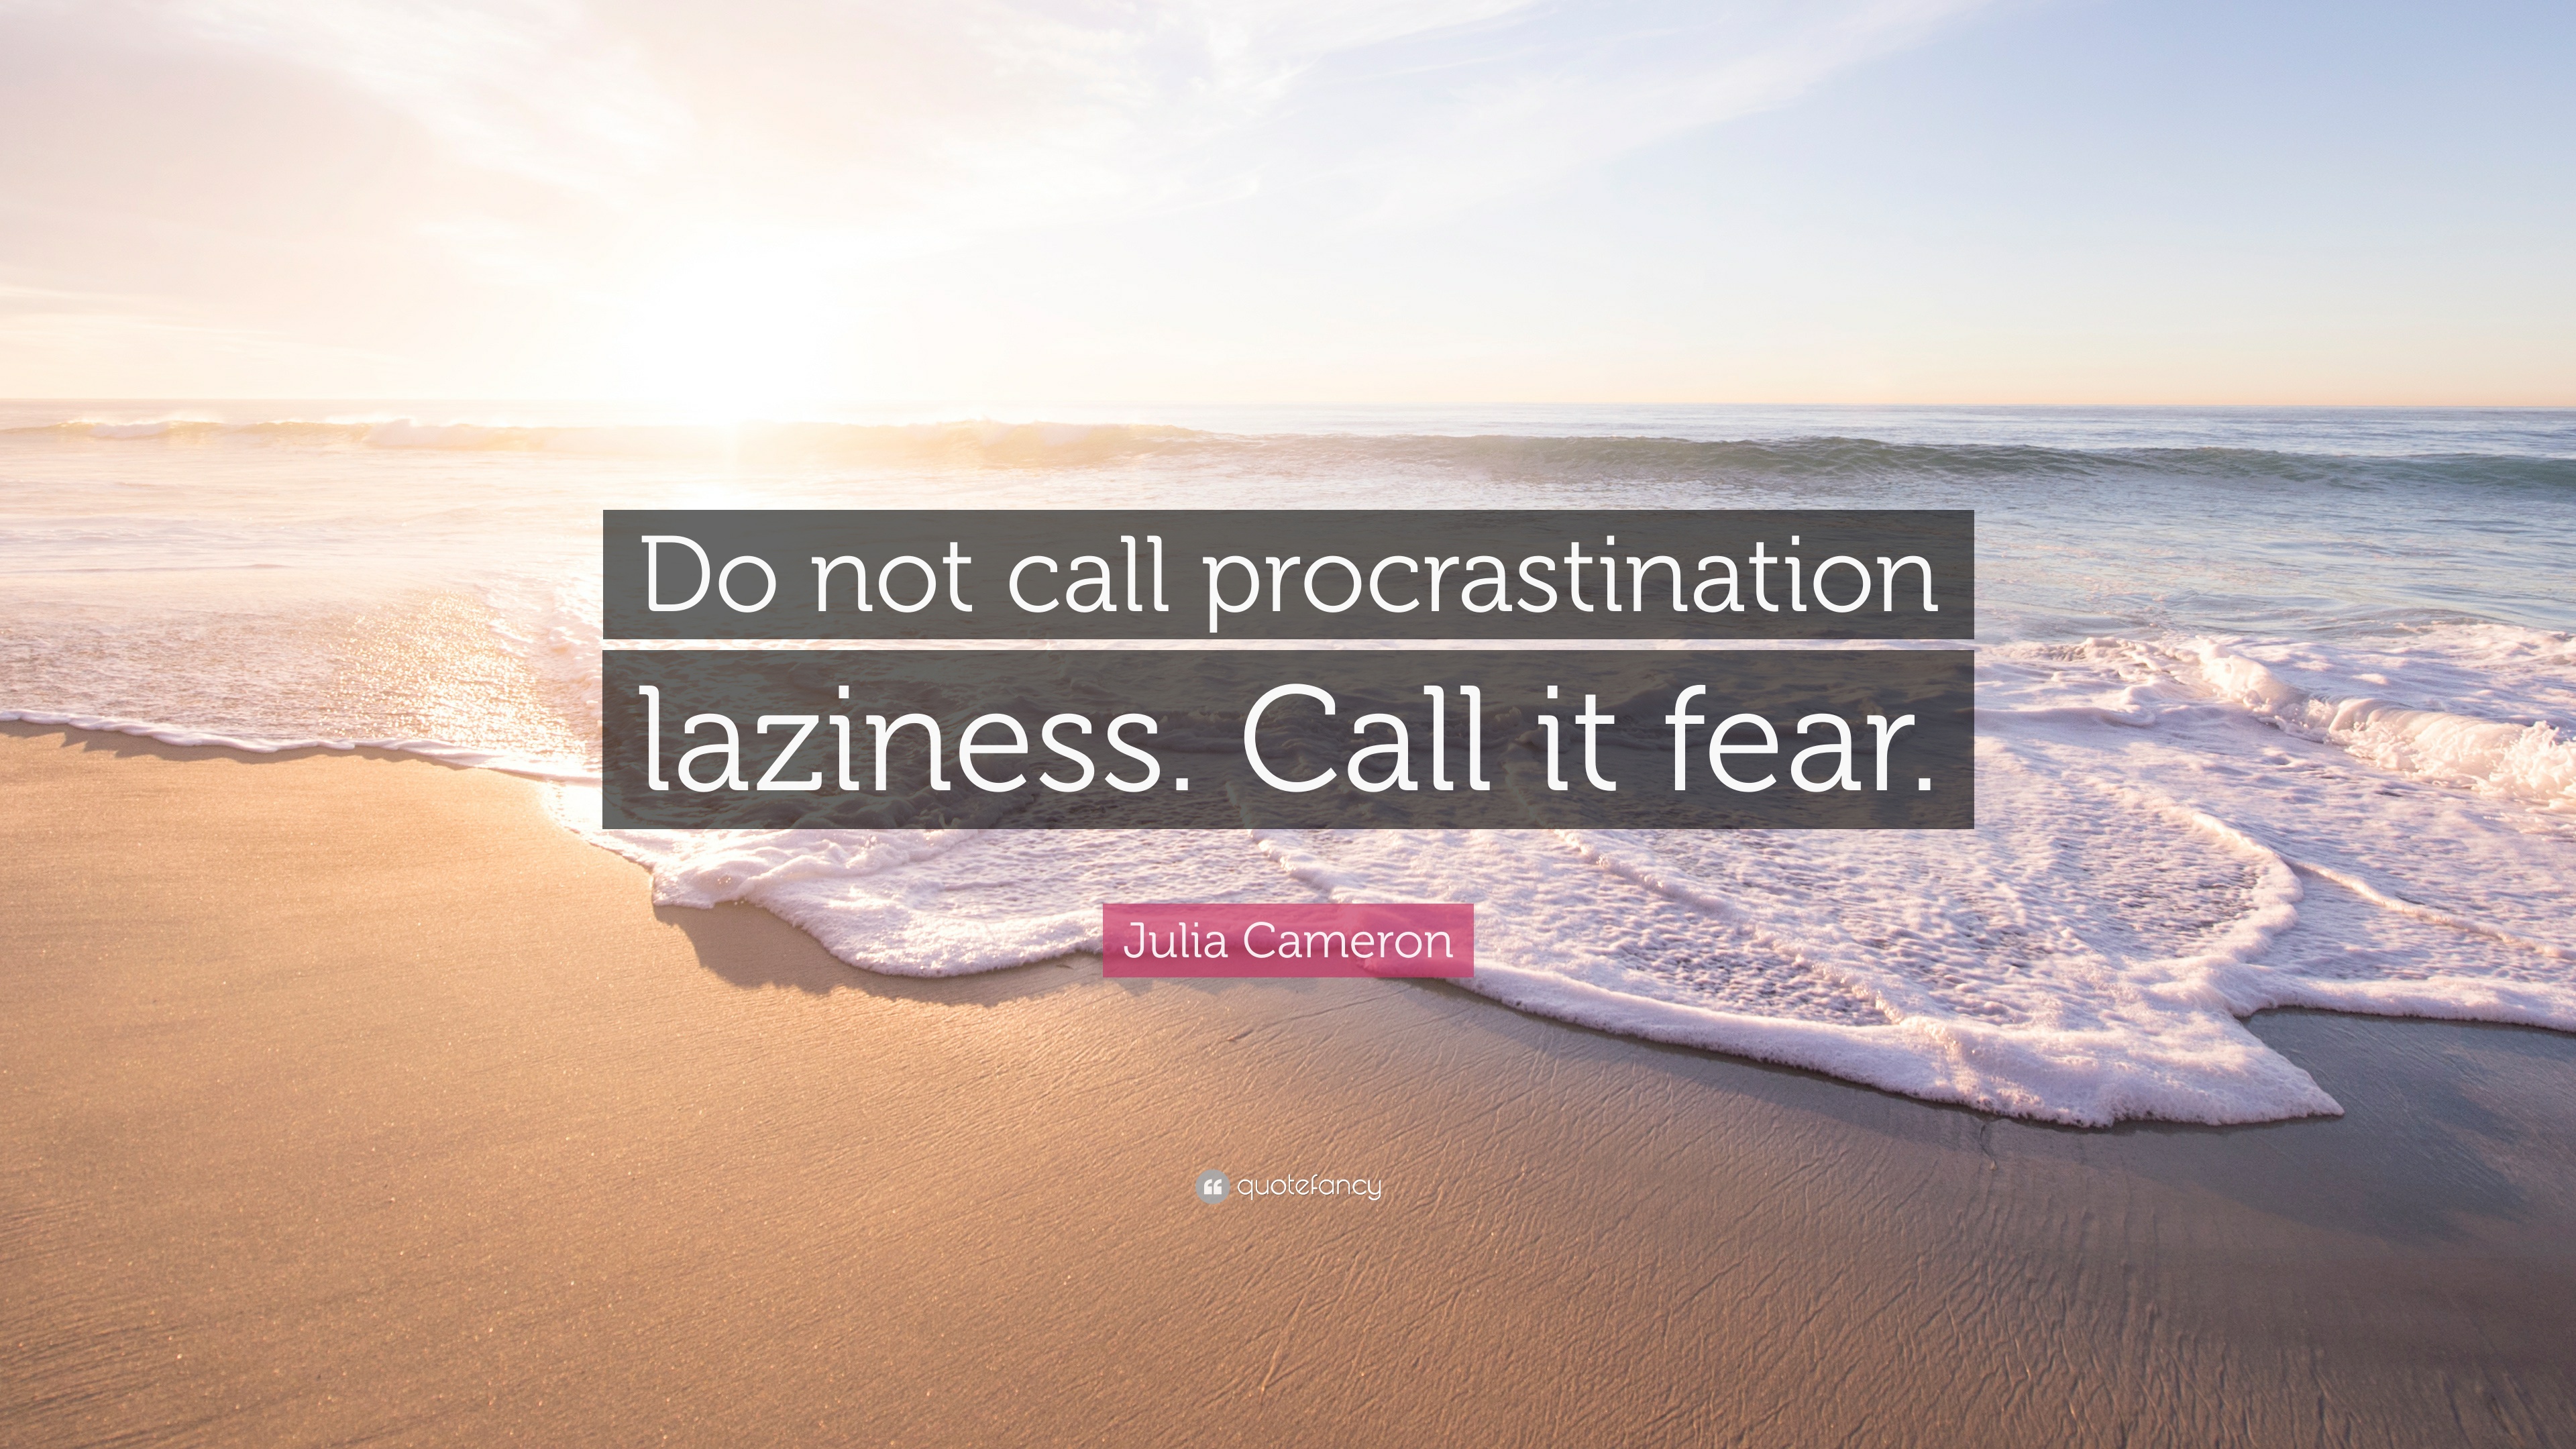 Julia Cameron Quote: “Do not call procrastination laziness. Call it fear.”